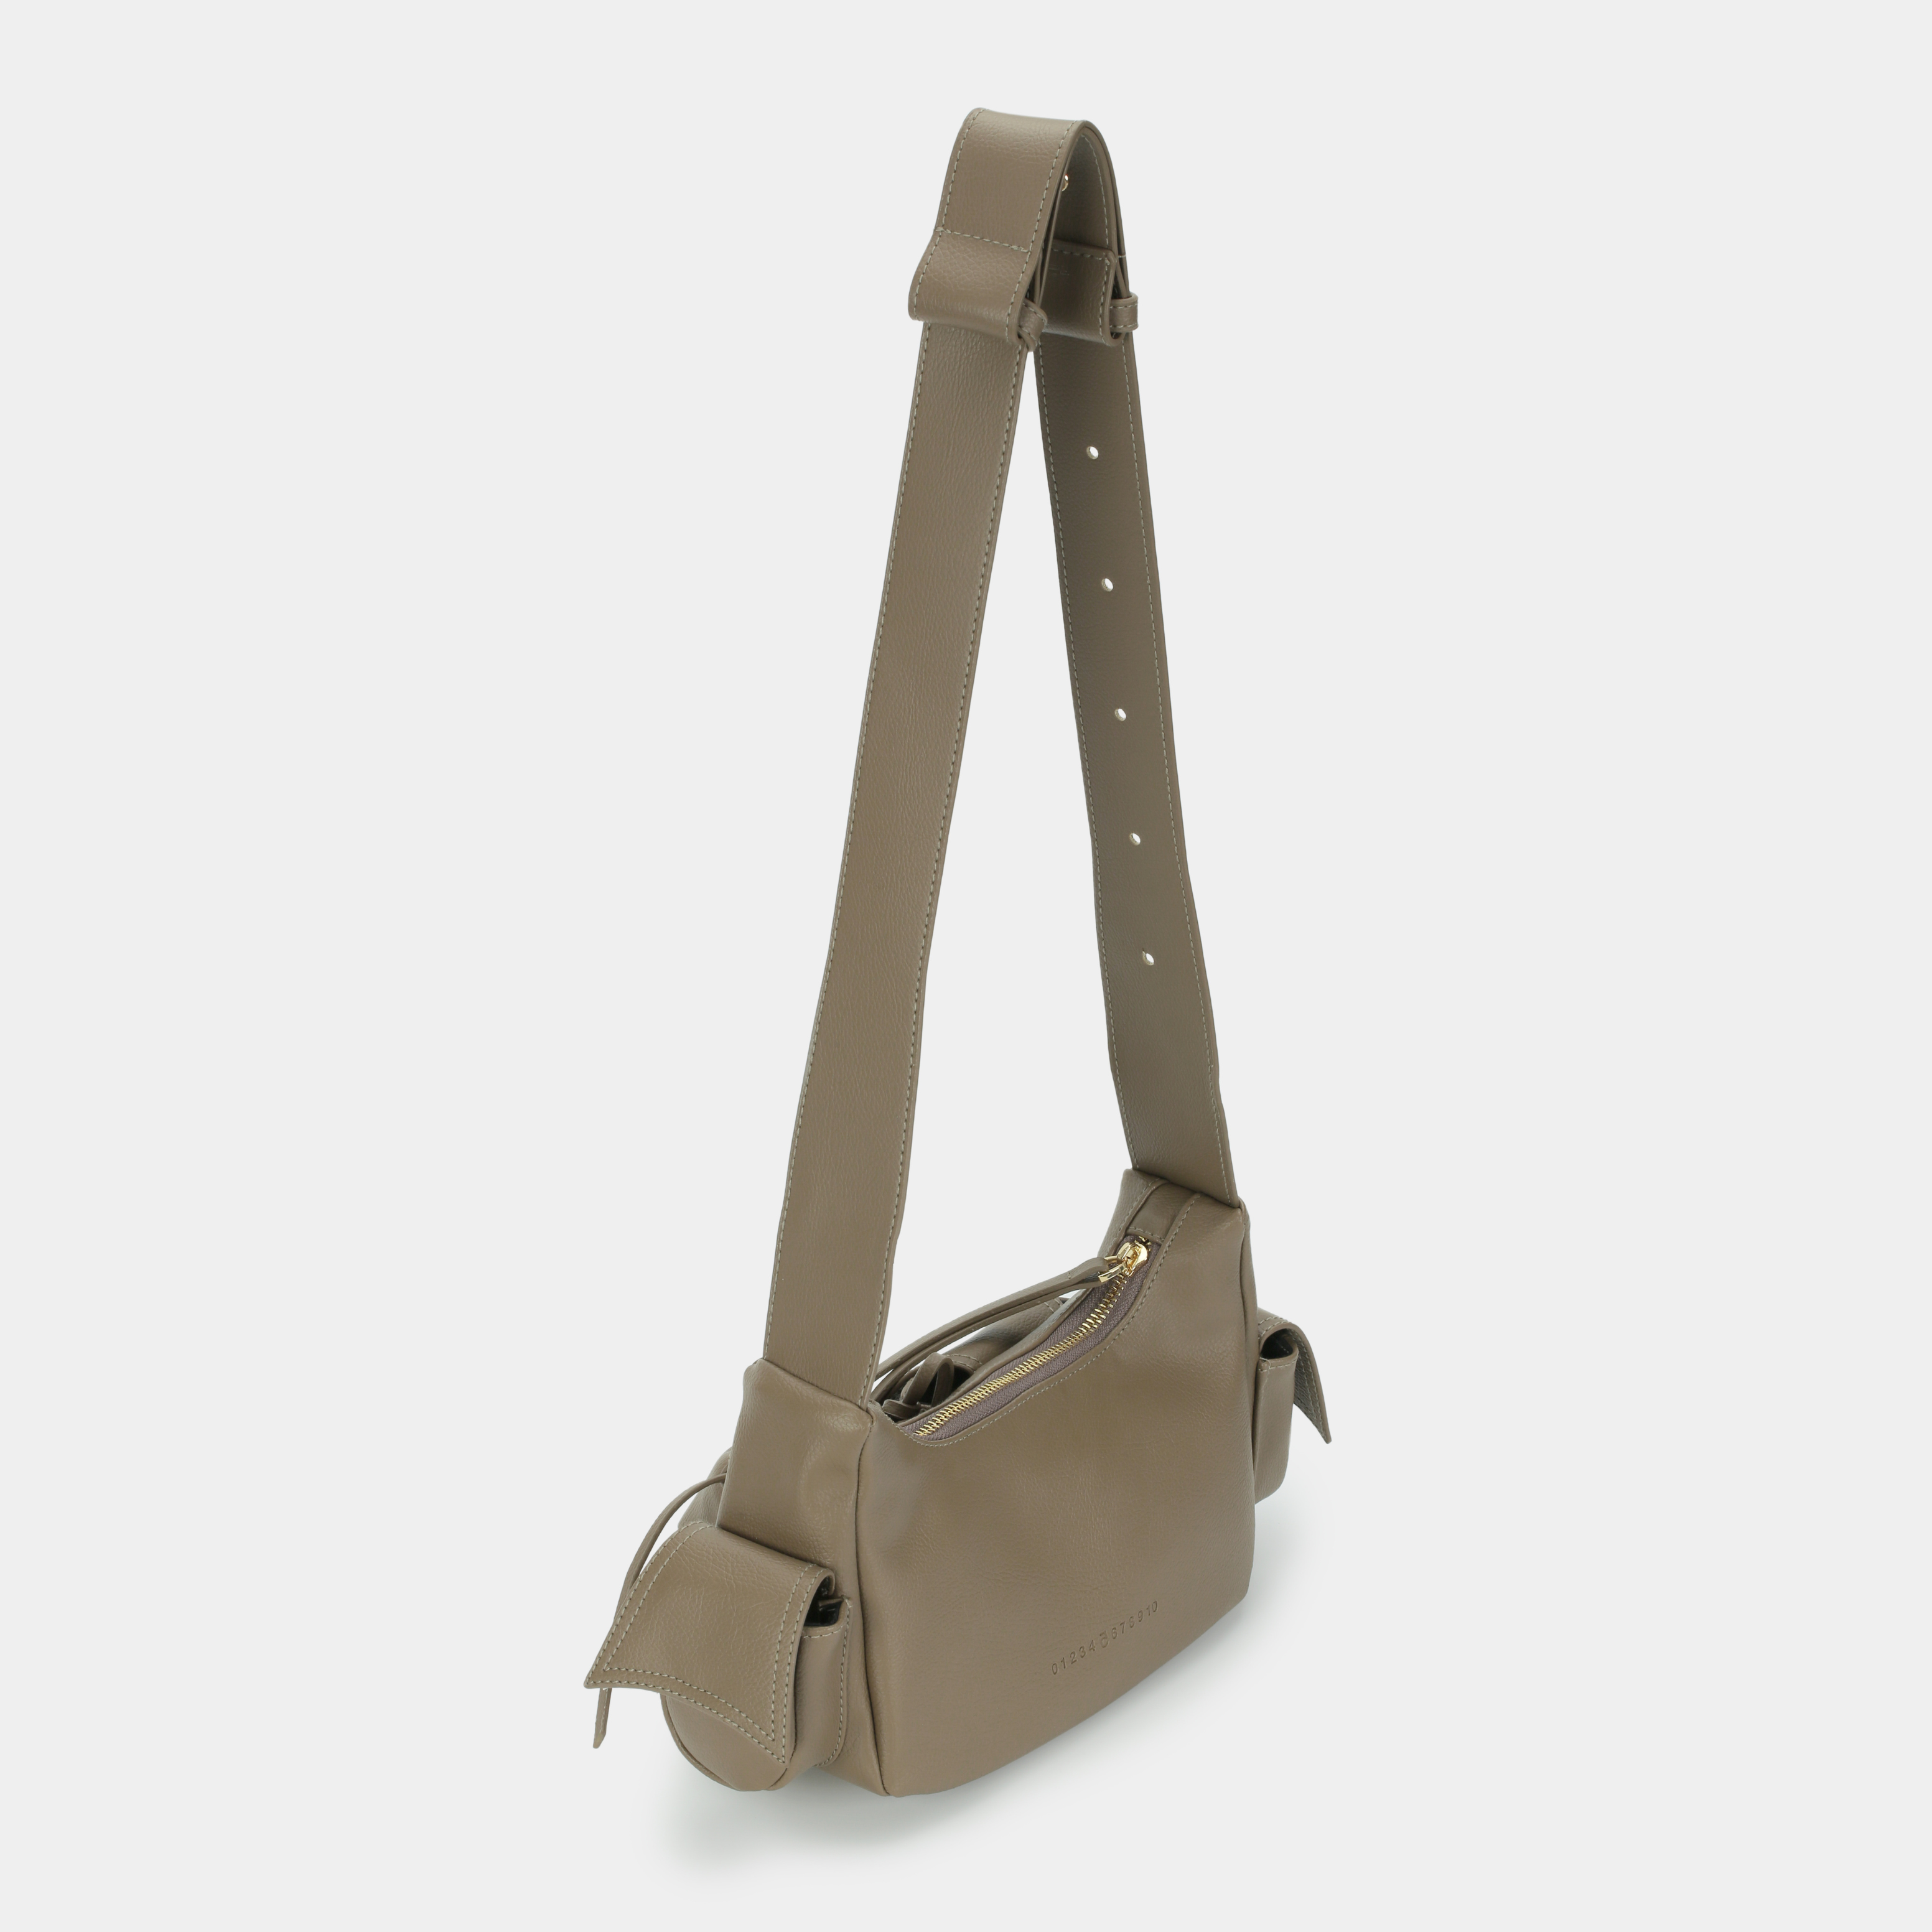 Túi xách C5-Pocket size nhỏ (S) màu beige tối